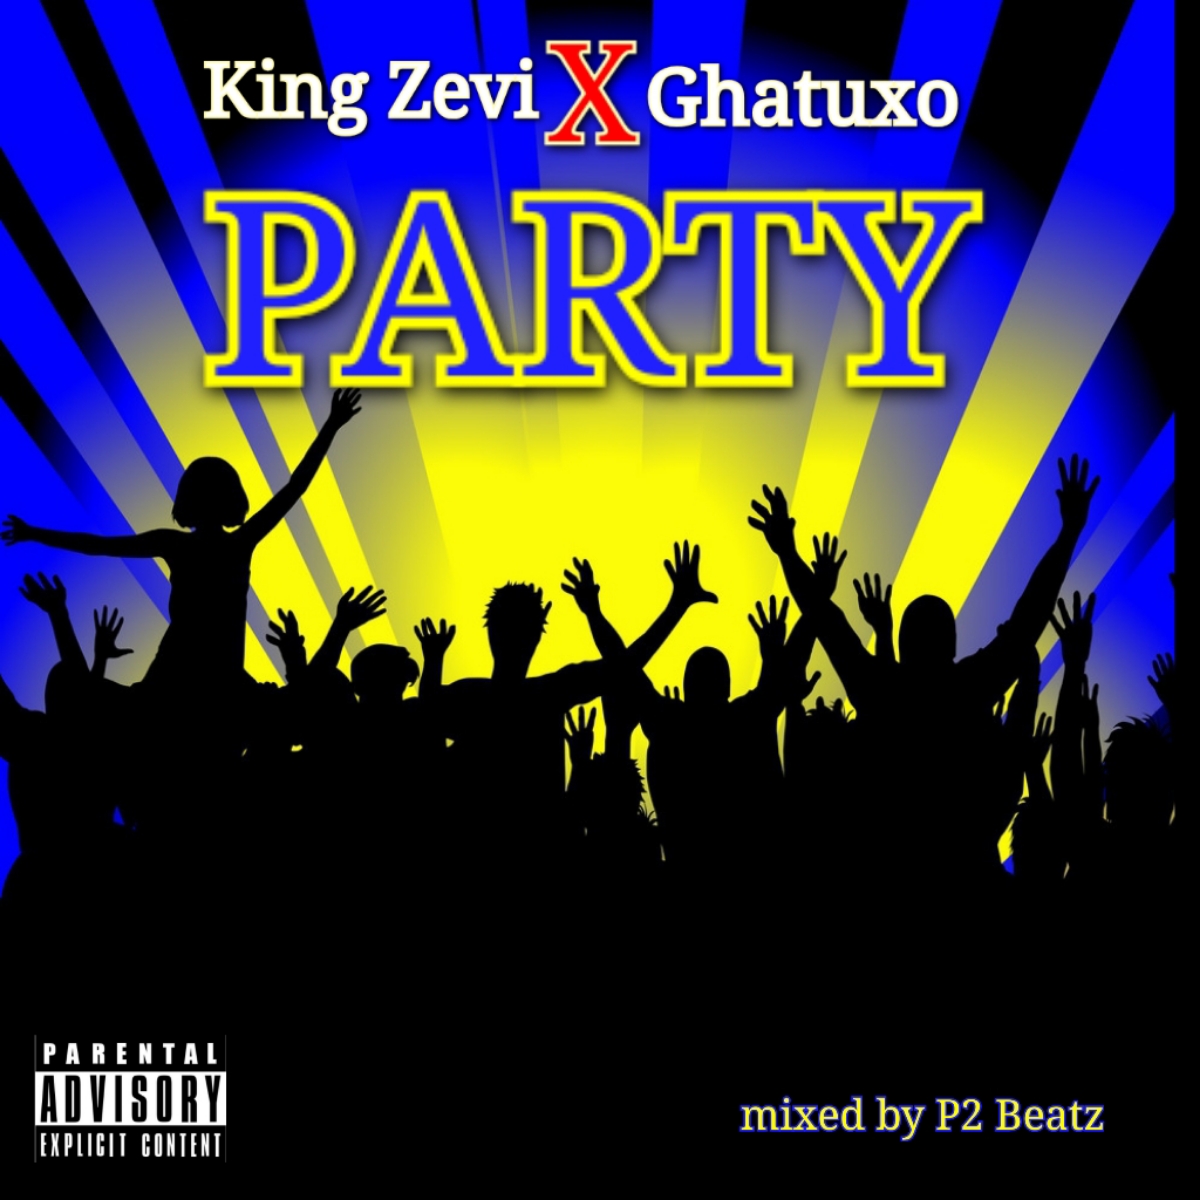 King Zevi X Ghatuxo - Party